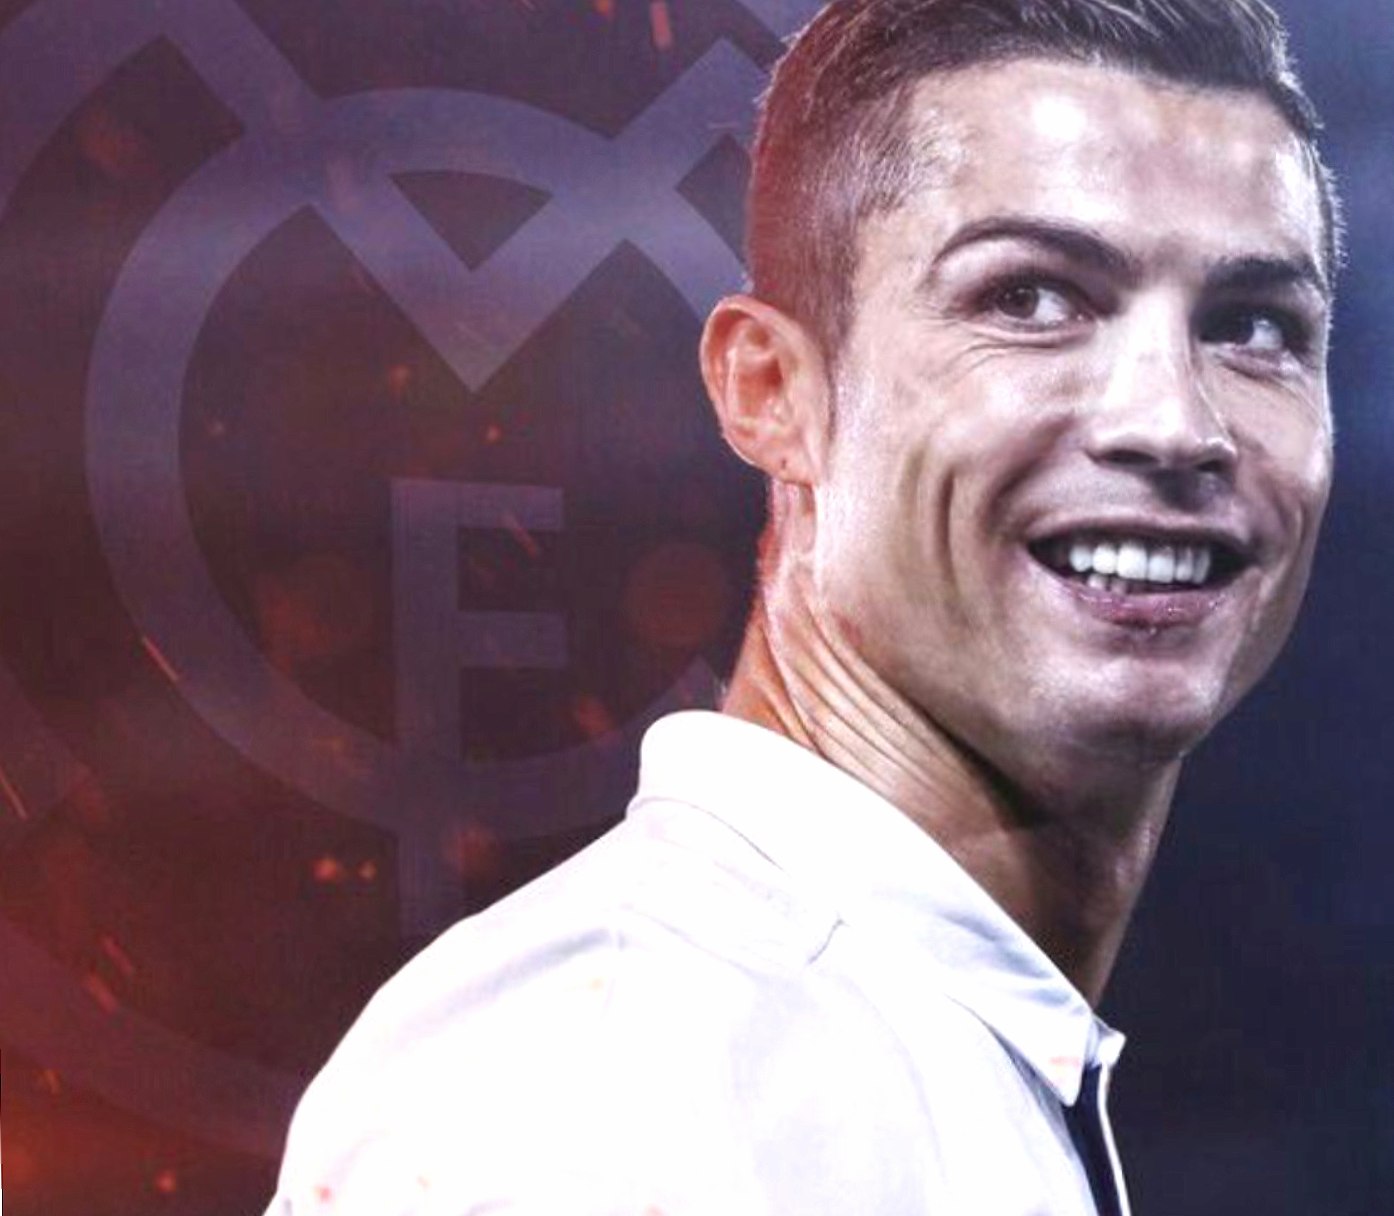 Ronaldo real madrid at 2048 x 2048 iPad size wallpapers HD quality